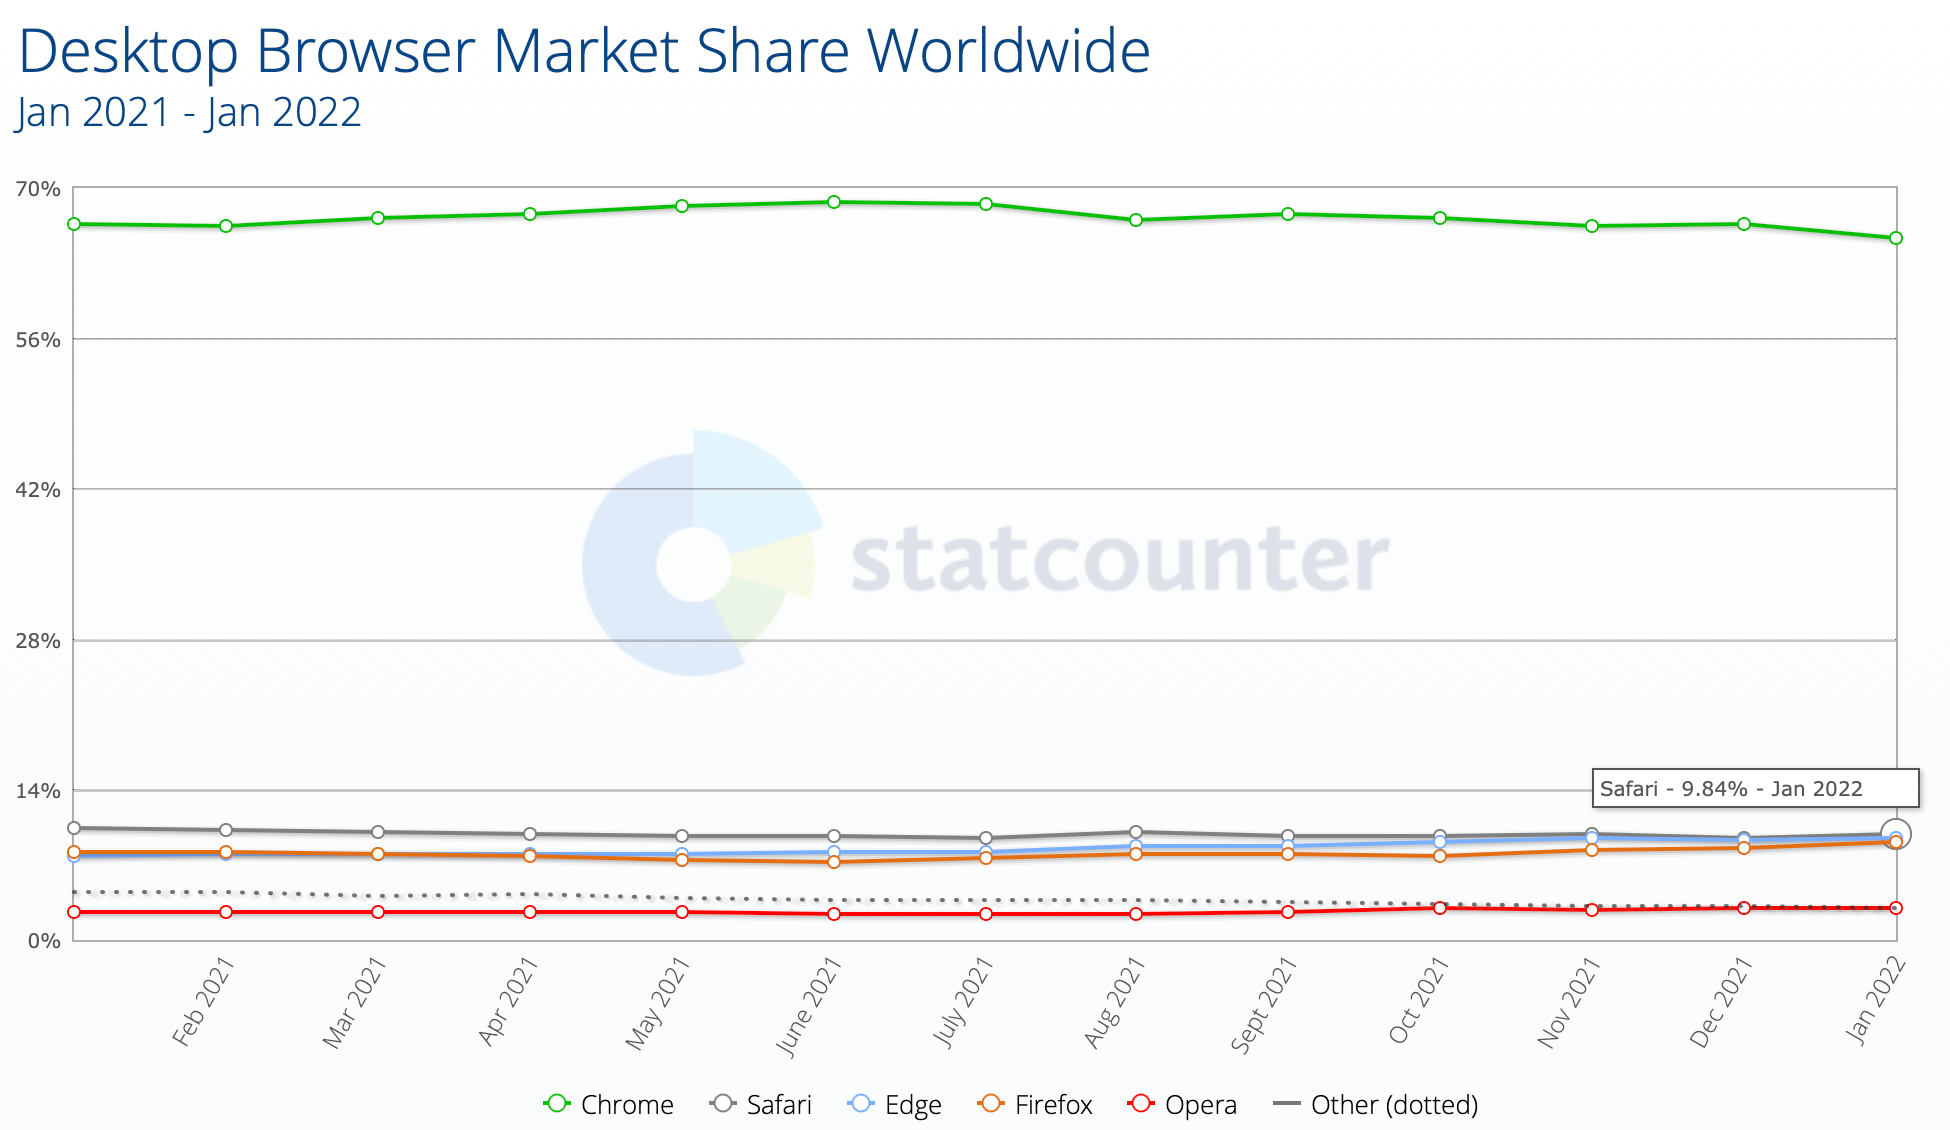 Safari 即将失去其作为全球第二大桌面网络浏览器的地位